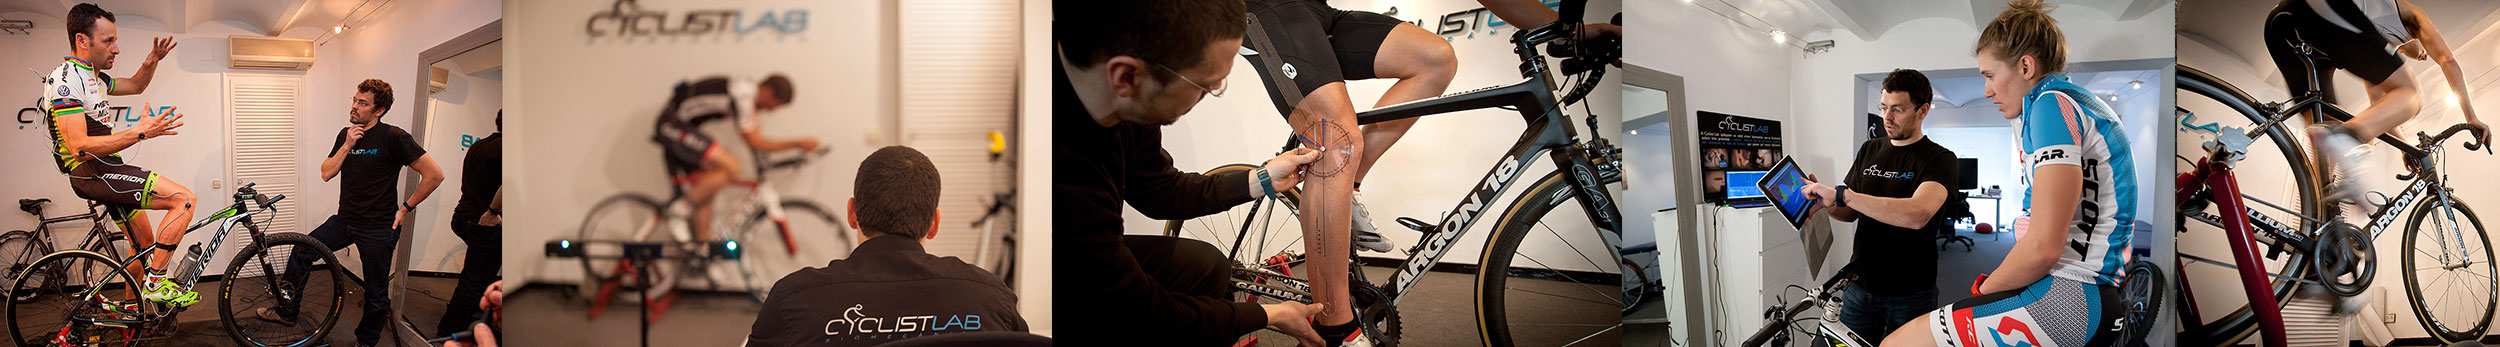 Cyclist Lab Biomecánica | Carlos Villarin